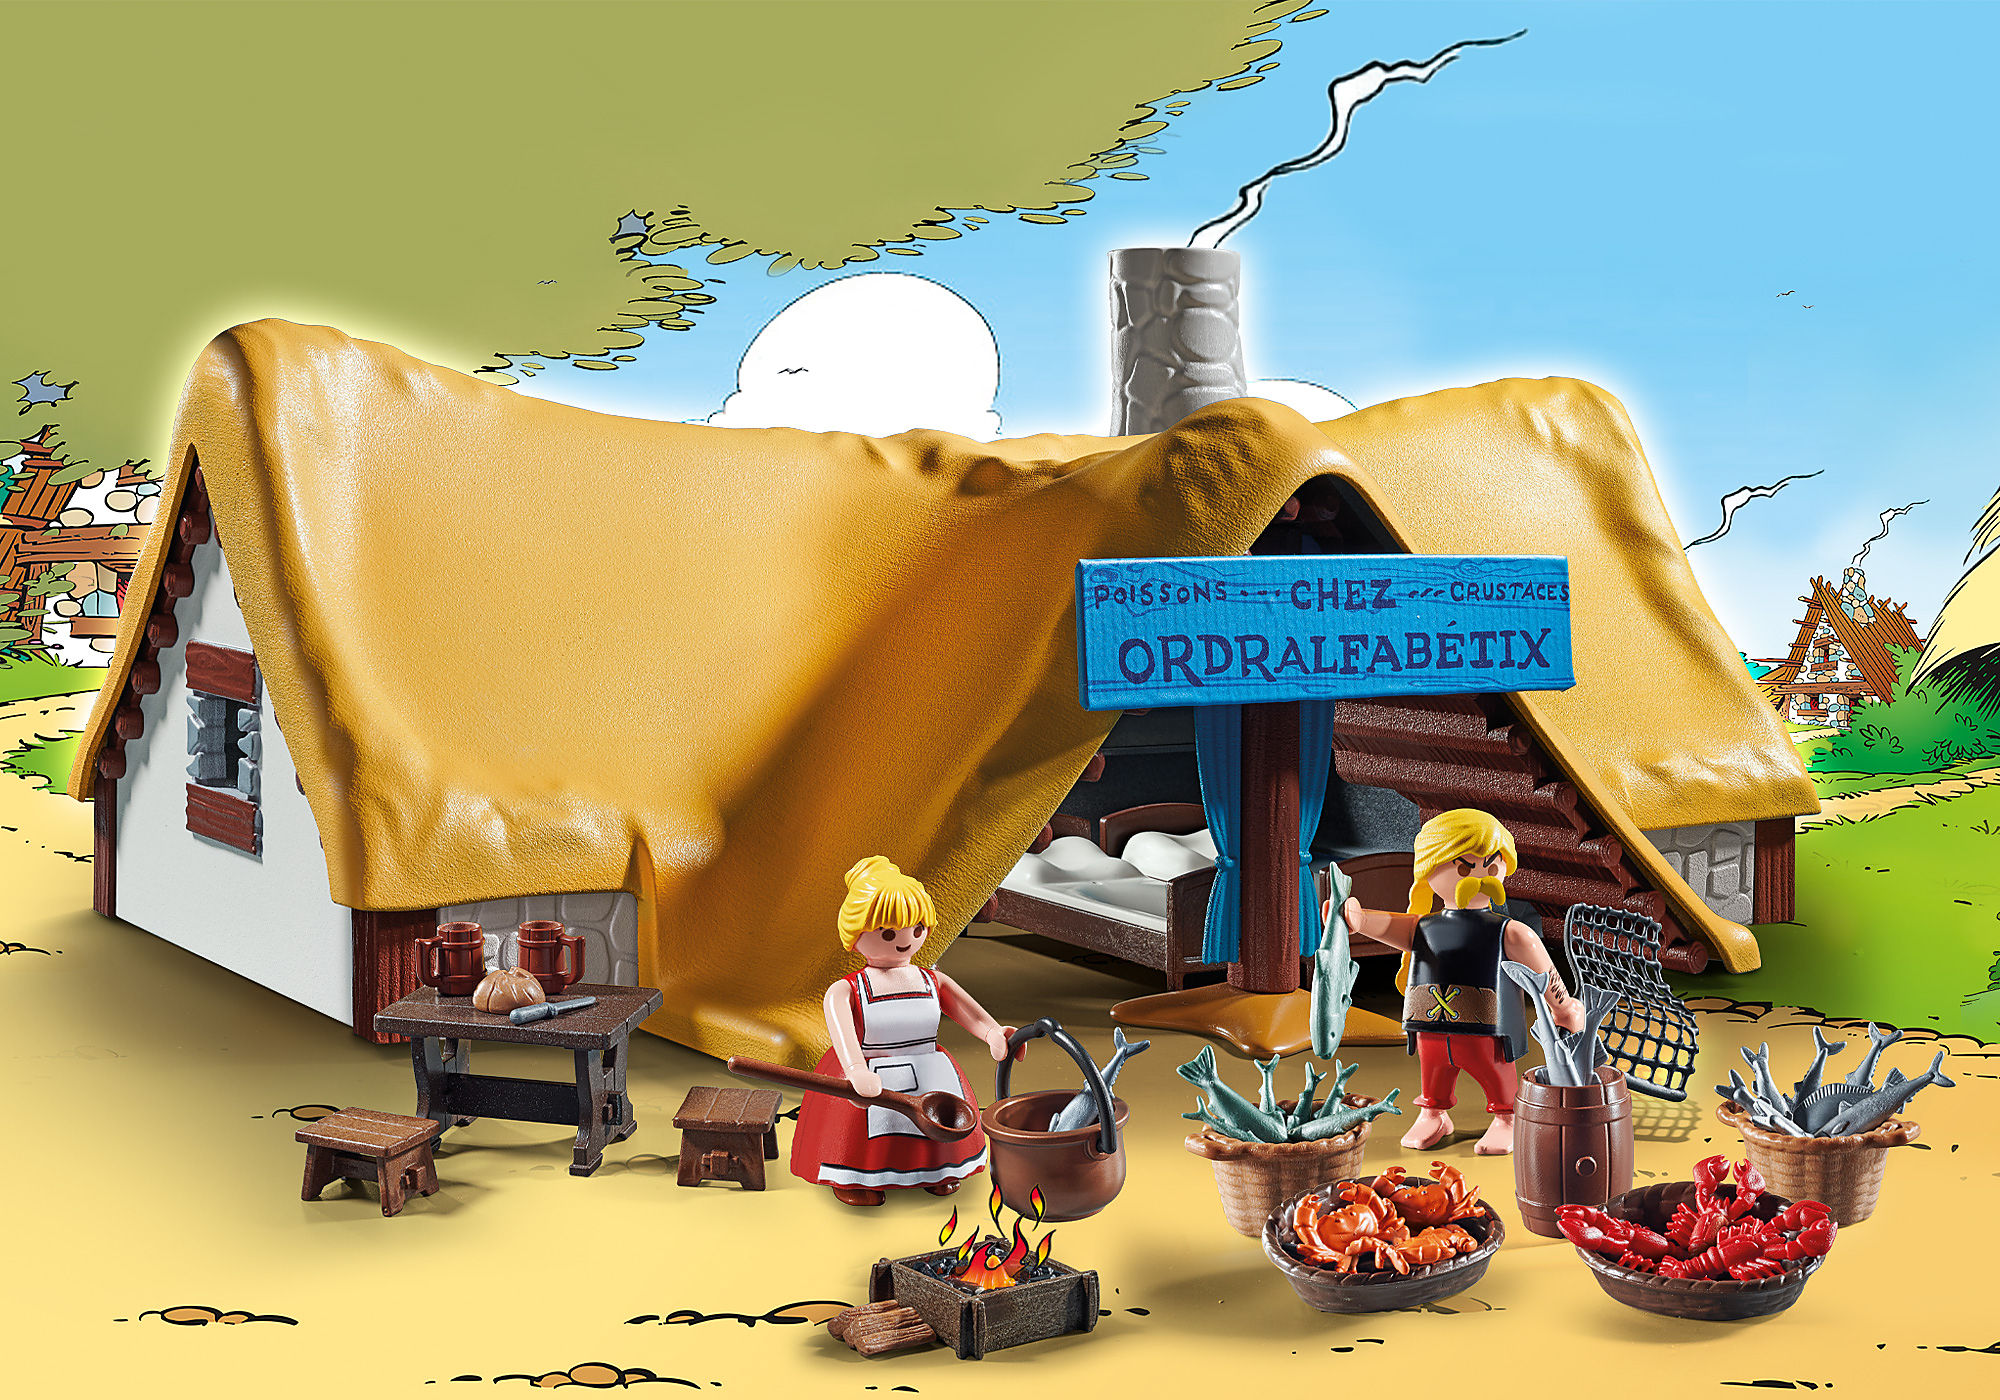 Exposition Playmobil ASTÉRIX avec collection de playmobil romain